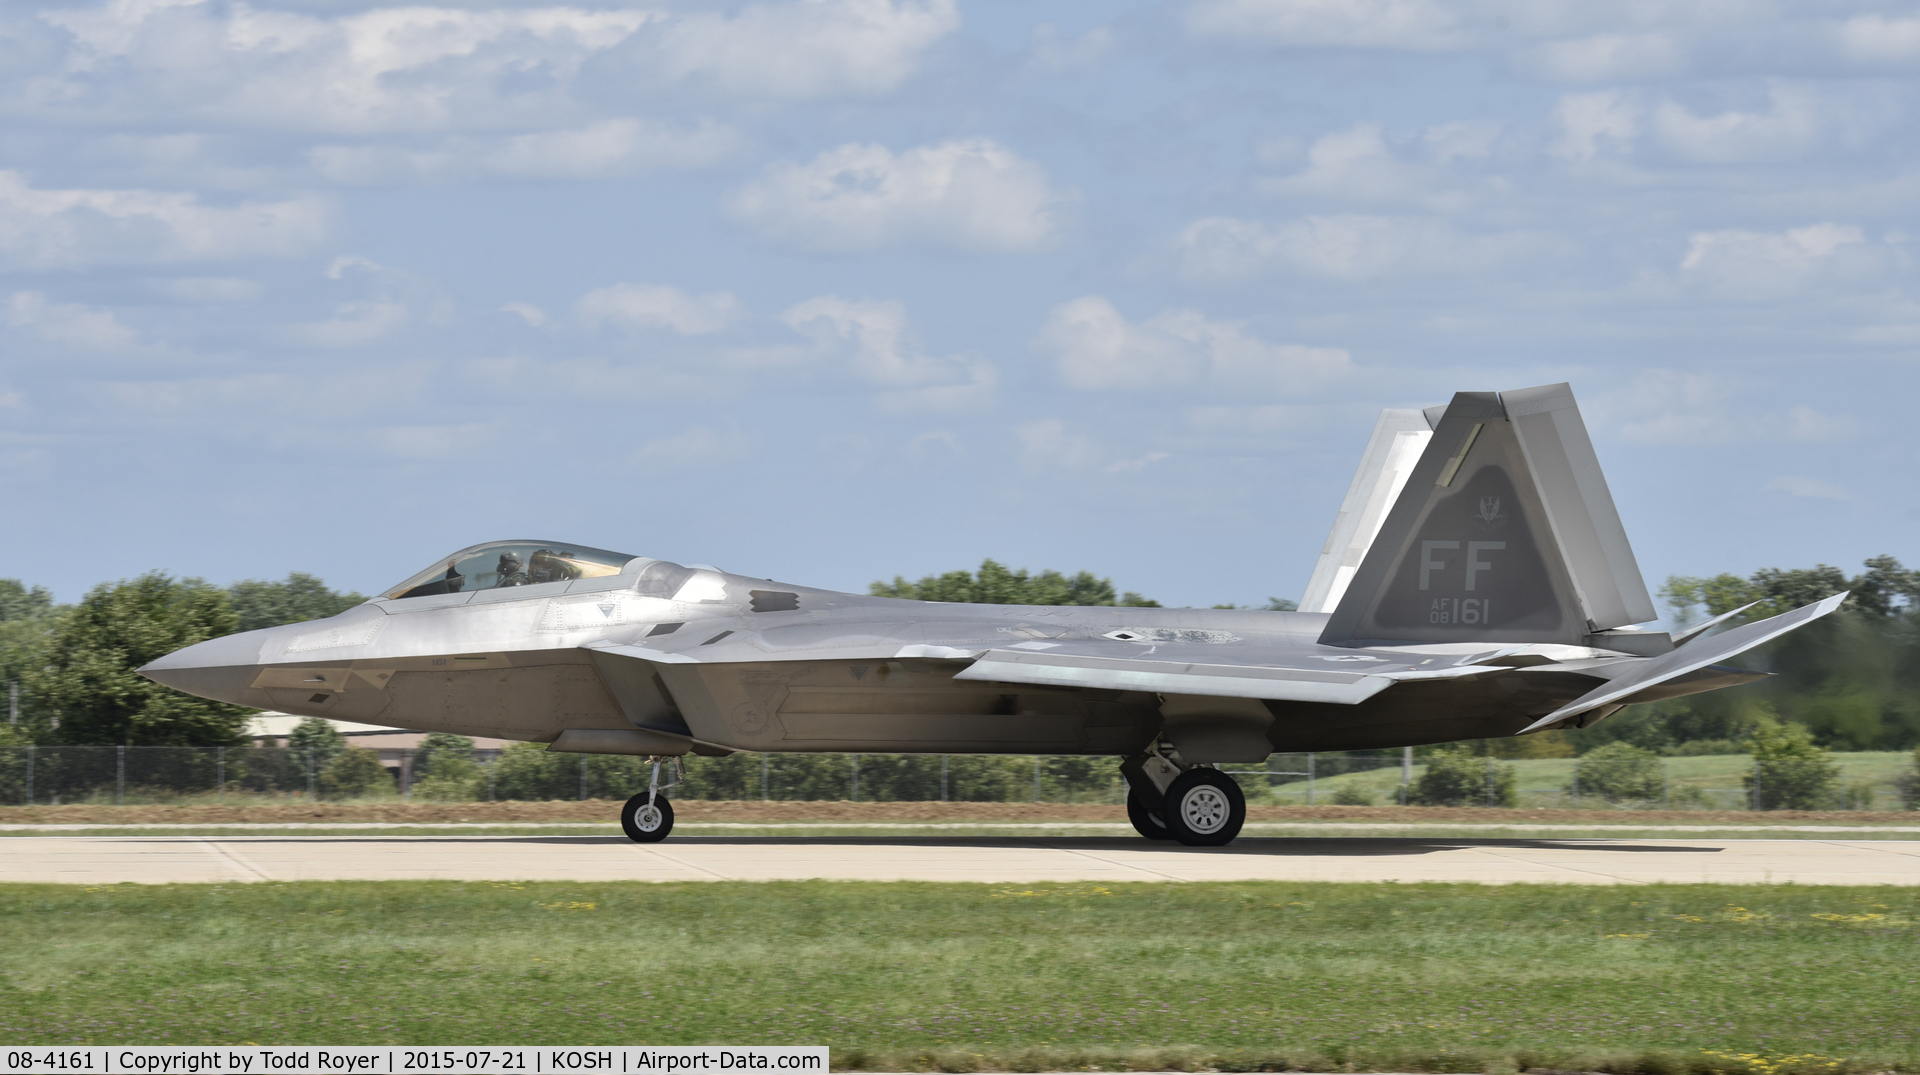 08-4161, 2008 Lockheed Martin F-22A Raptor C/N 4161, Airventure 2015